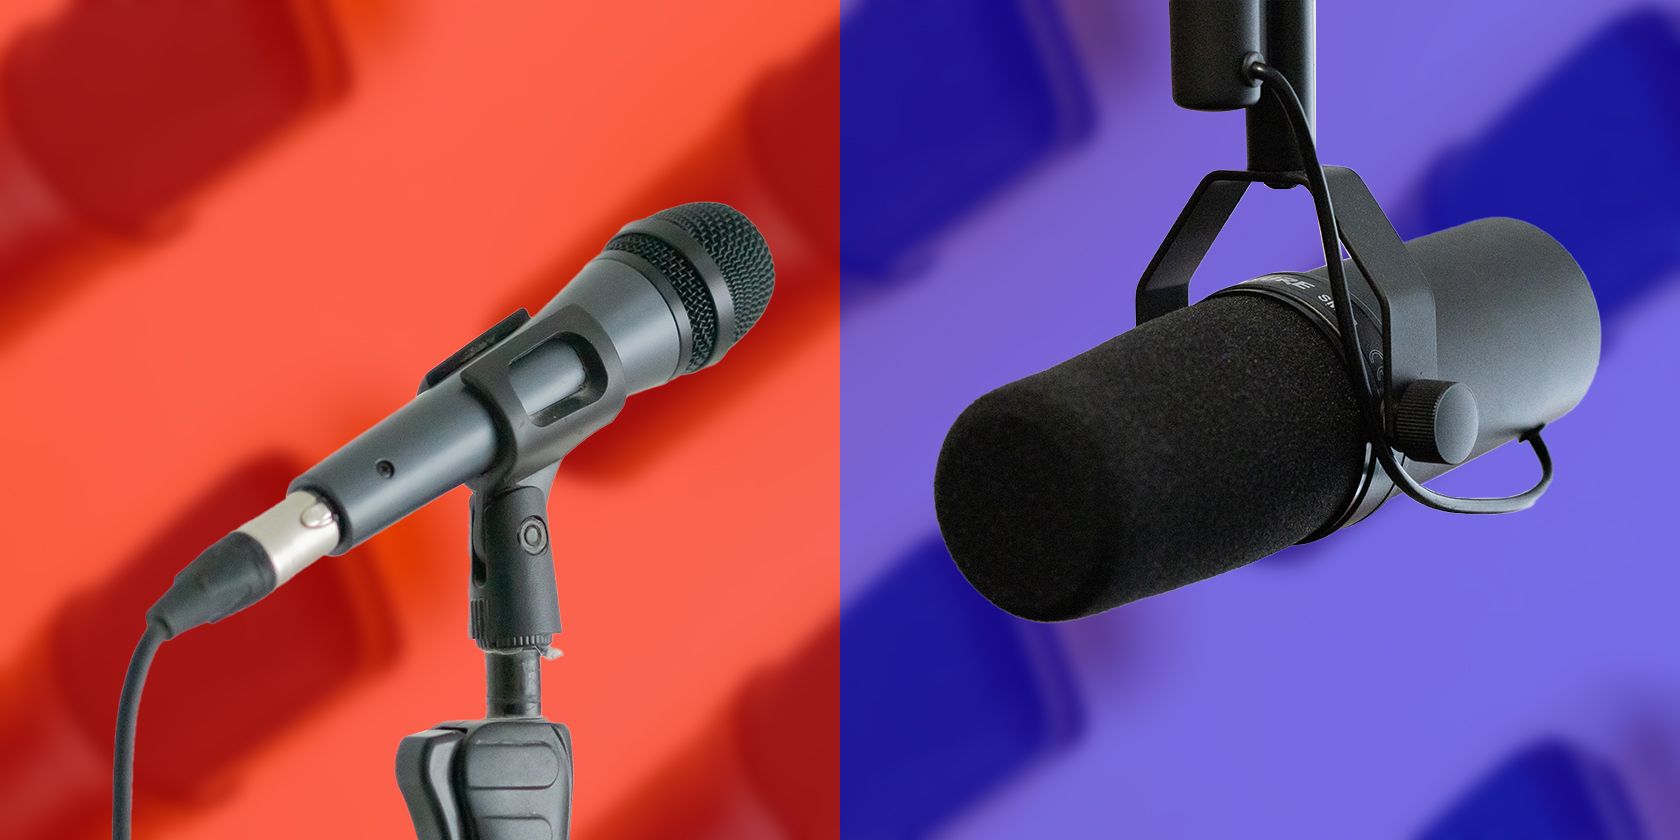 directional microphone vs beamformer